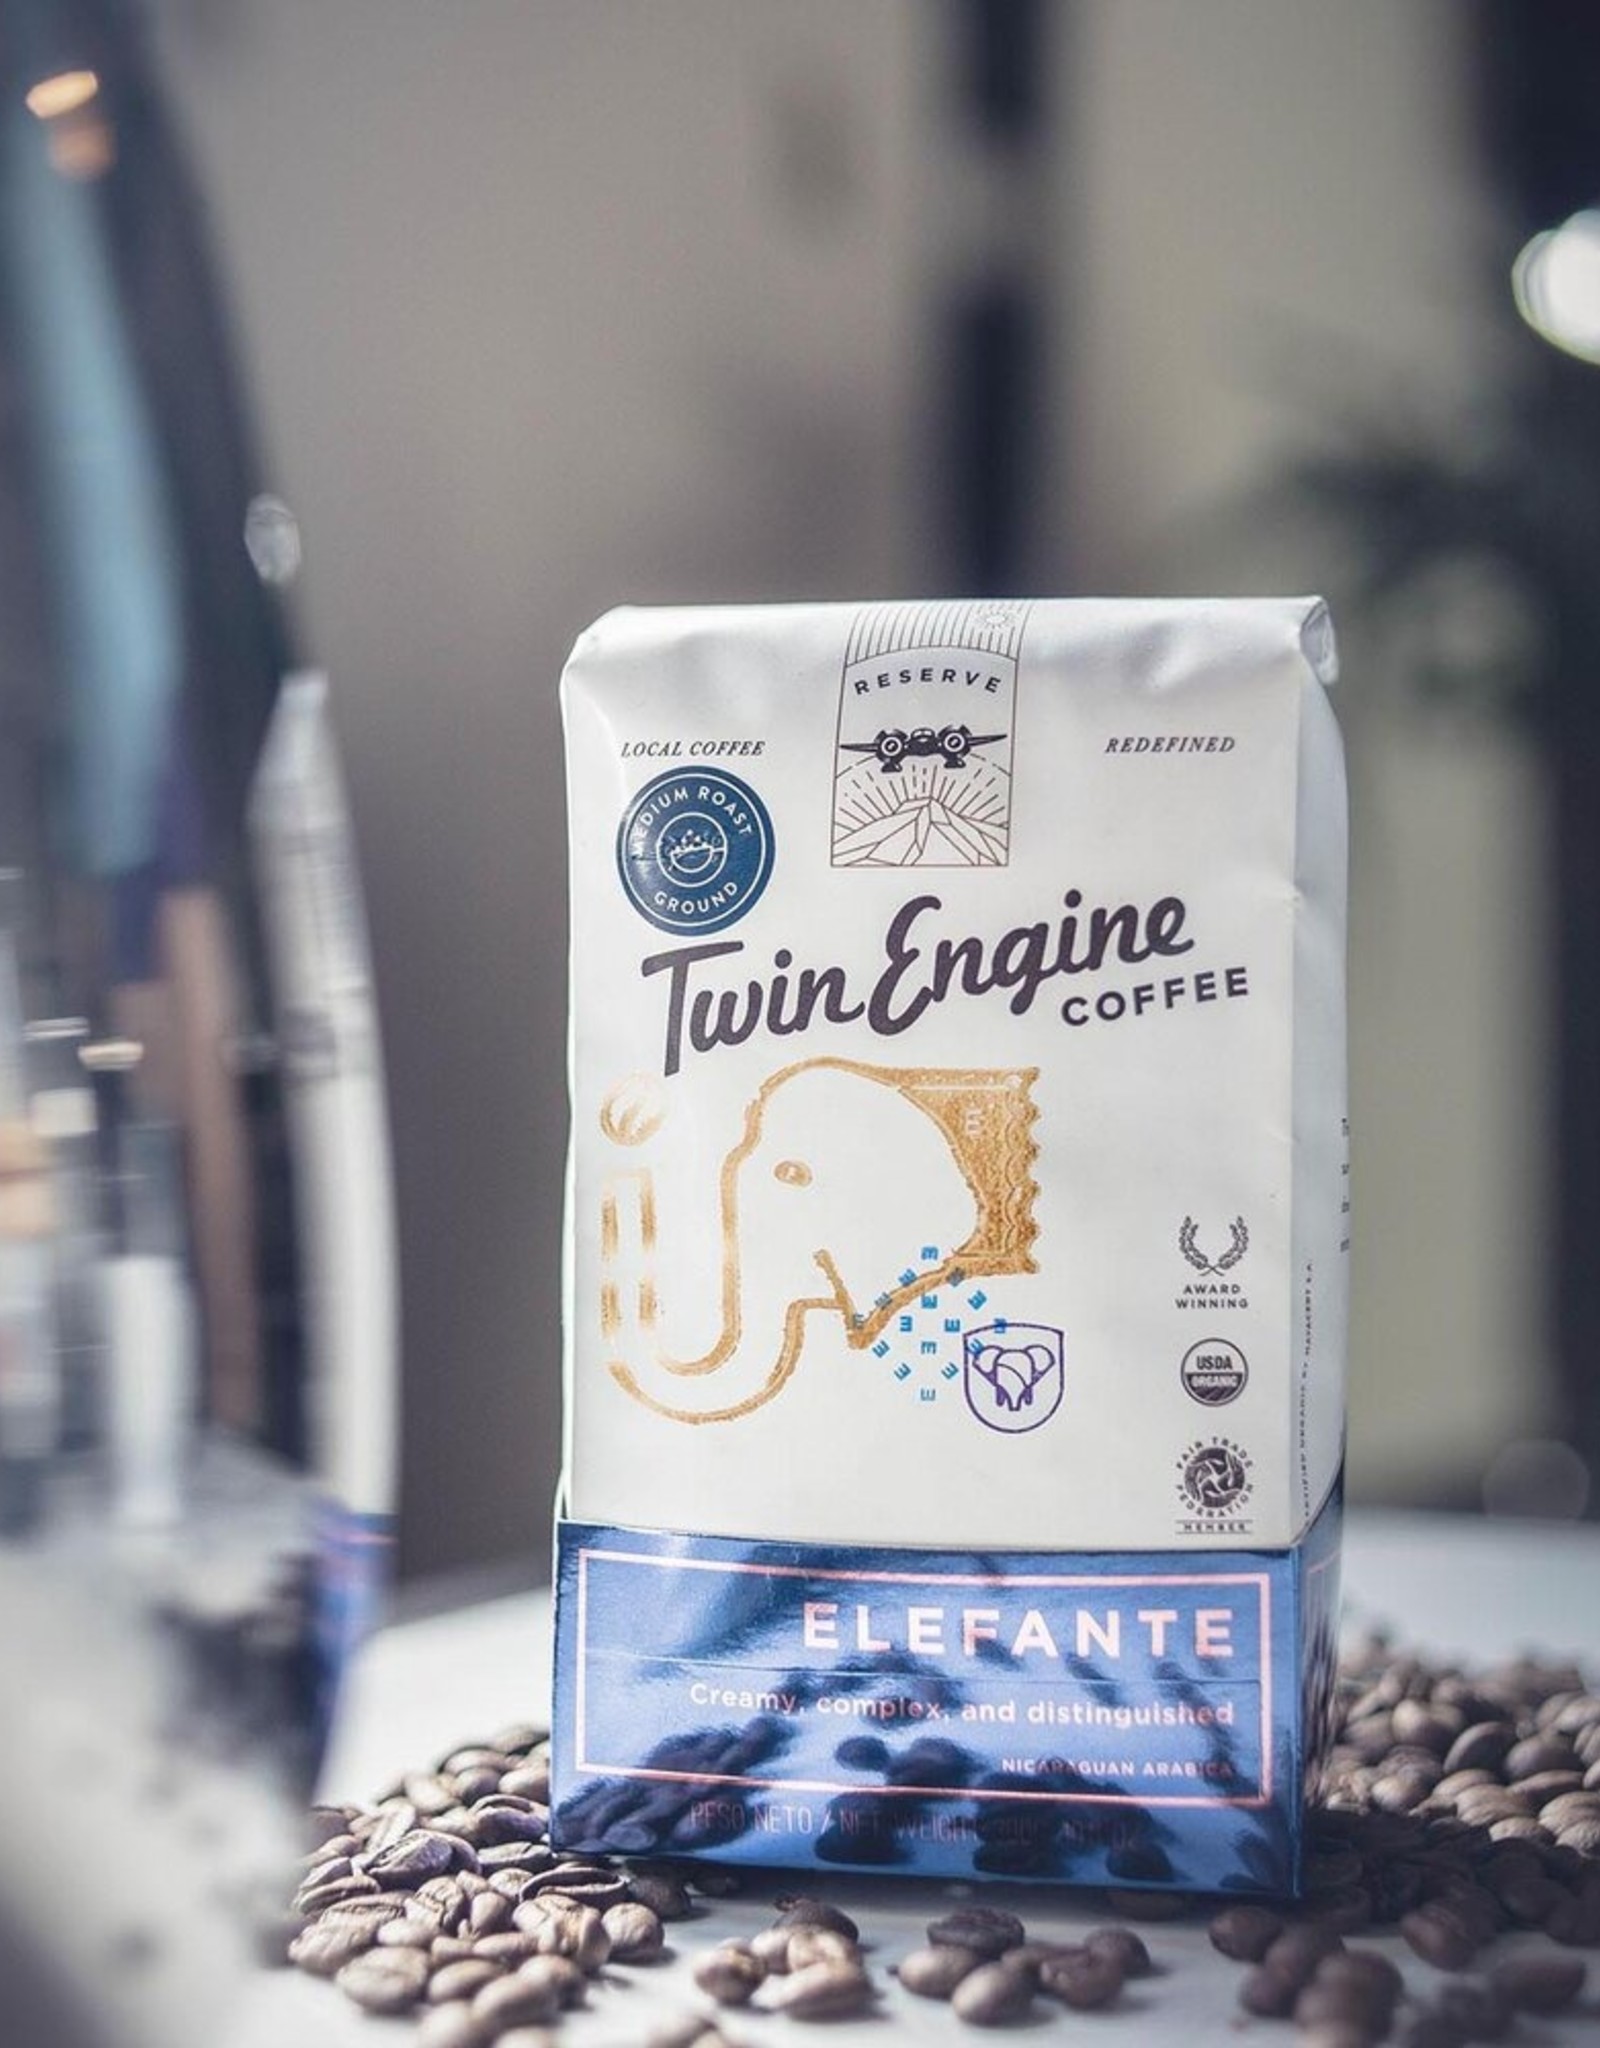 Twin Engine Elefante Reserve Coffee